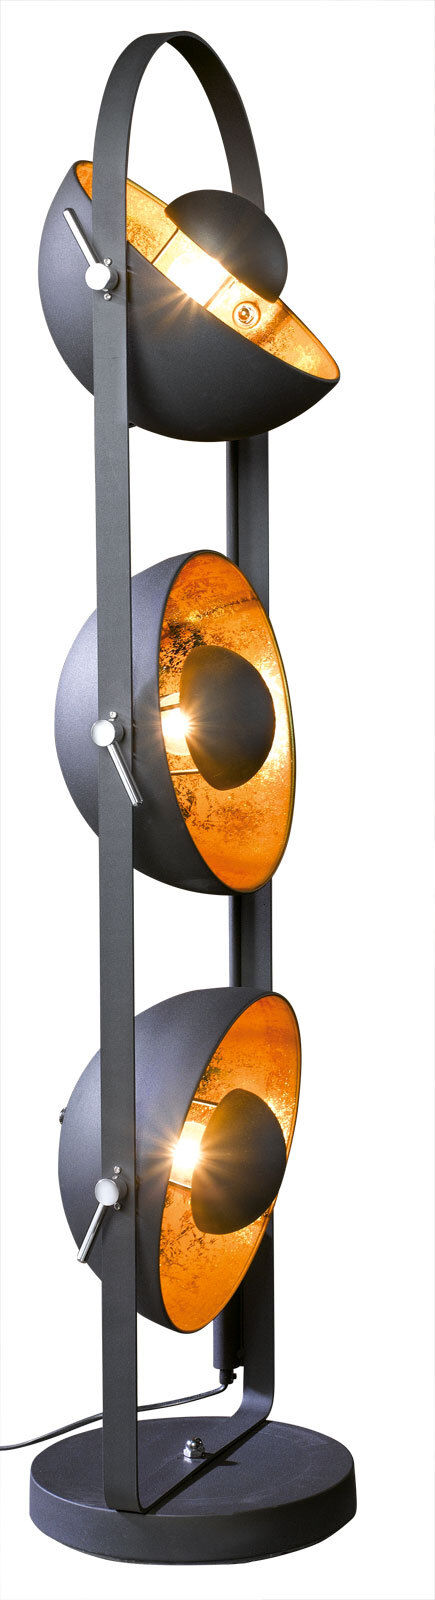 casaNOVA Retrofit Stehlampe FAME 3-flg schwarz/goldfarbig